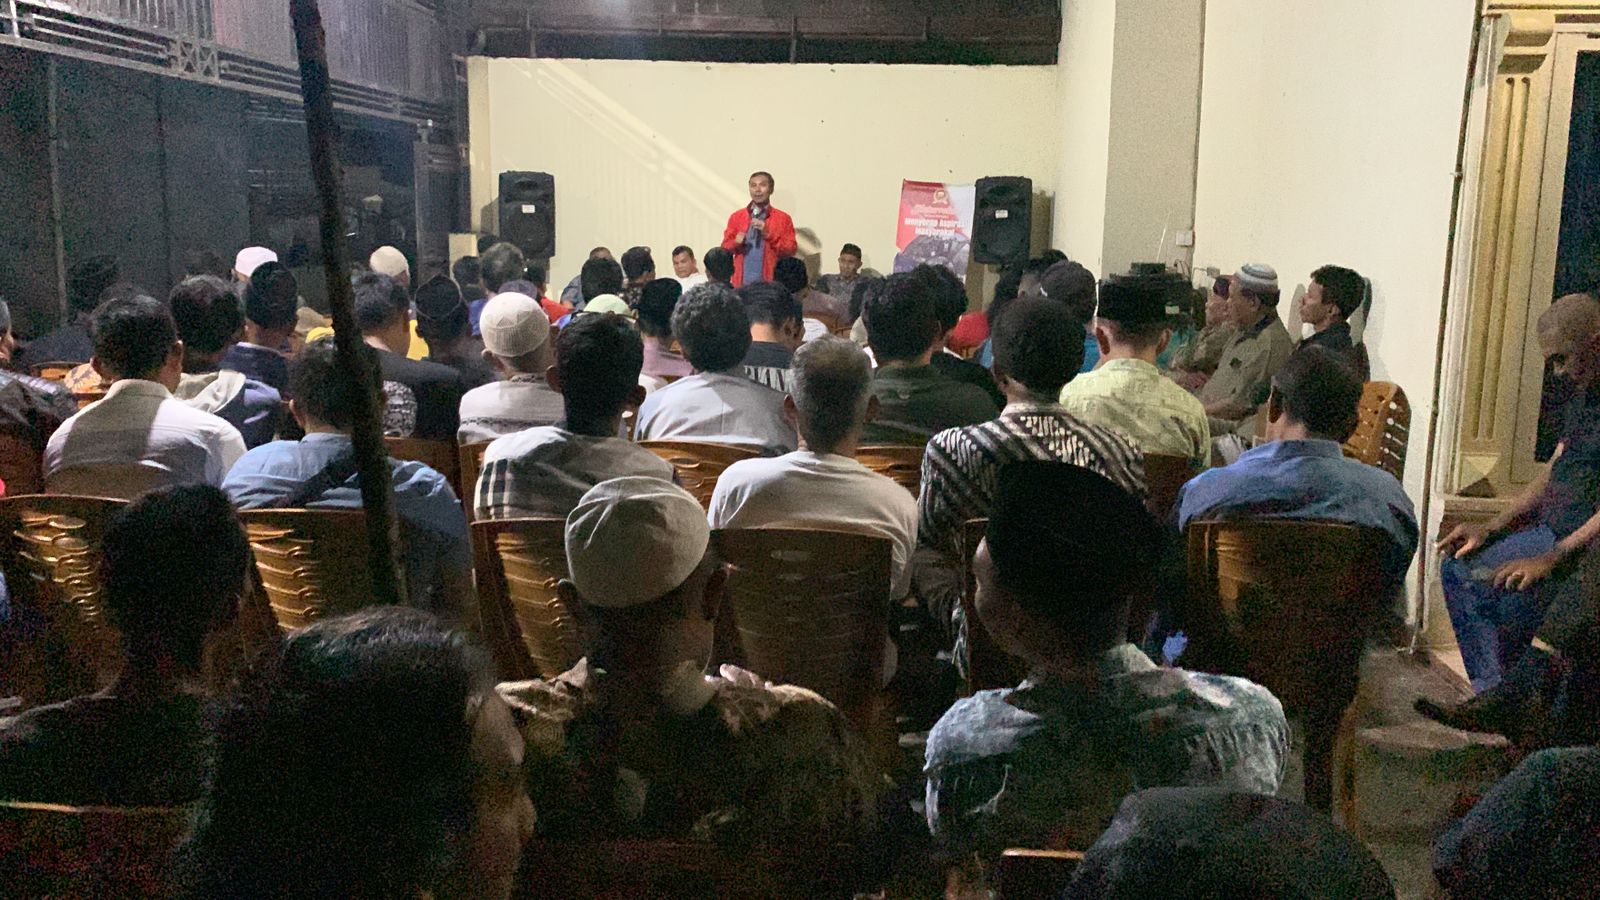 Reses di Tehok, Edi Purwanto Bicara Program DPRD Jambi Hingga Ajak Jaga Kamtibmas Jelang Pemilu